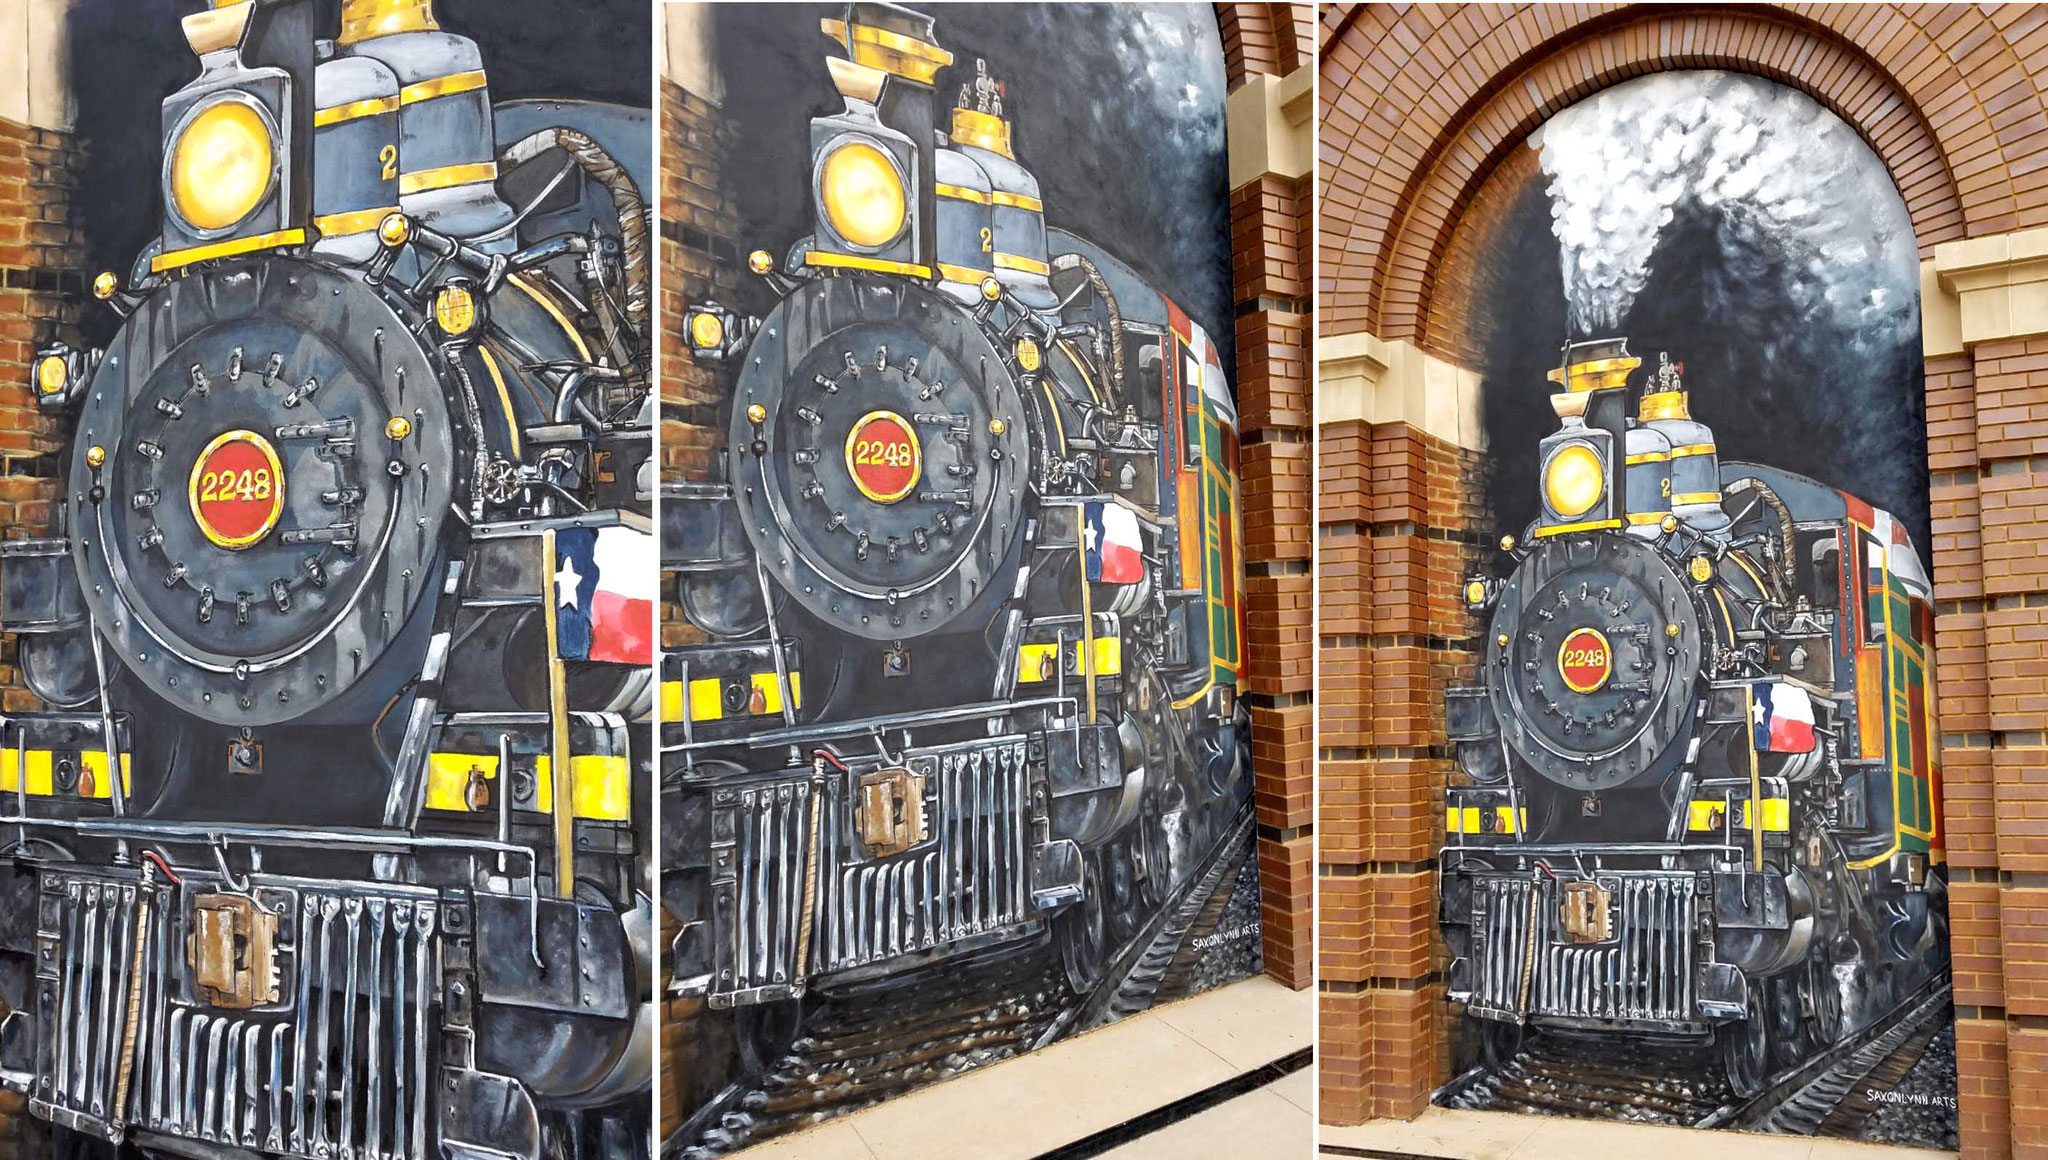 Harvest Hall 3D Locomotive Mural Grapevine Texas